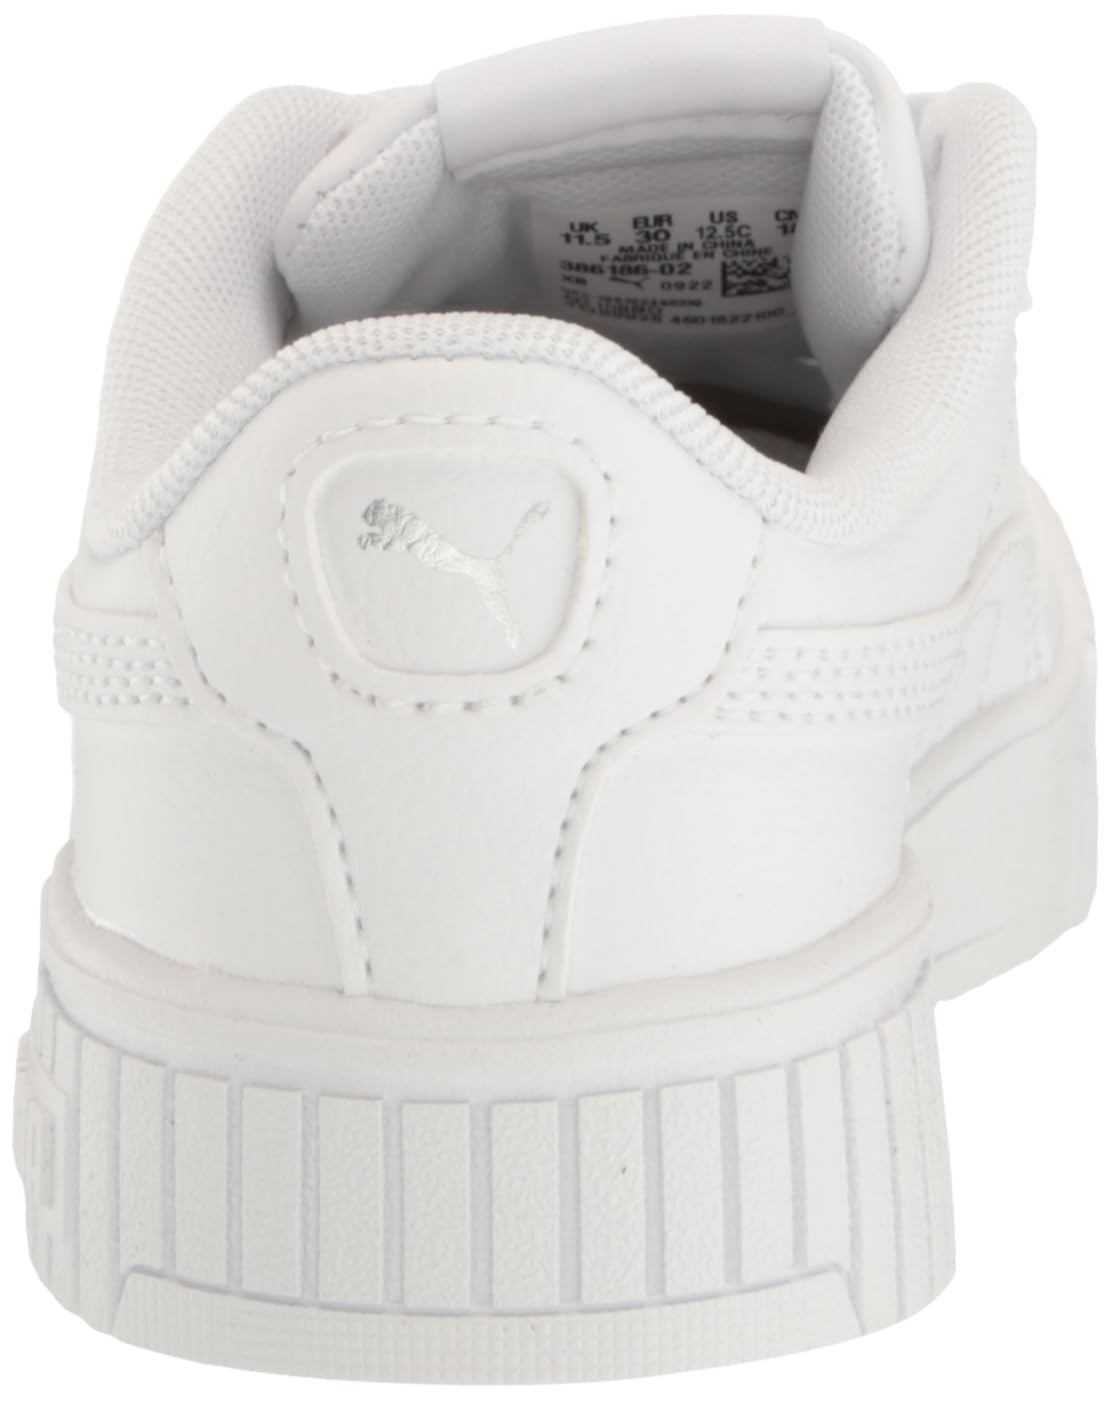 PUMA Unisex-Child Carina 2.0 Sneaker